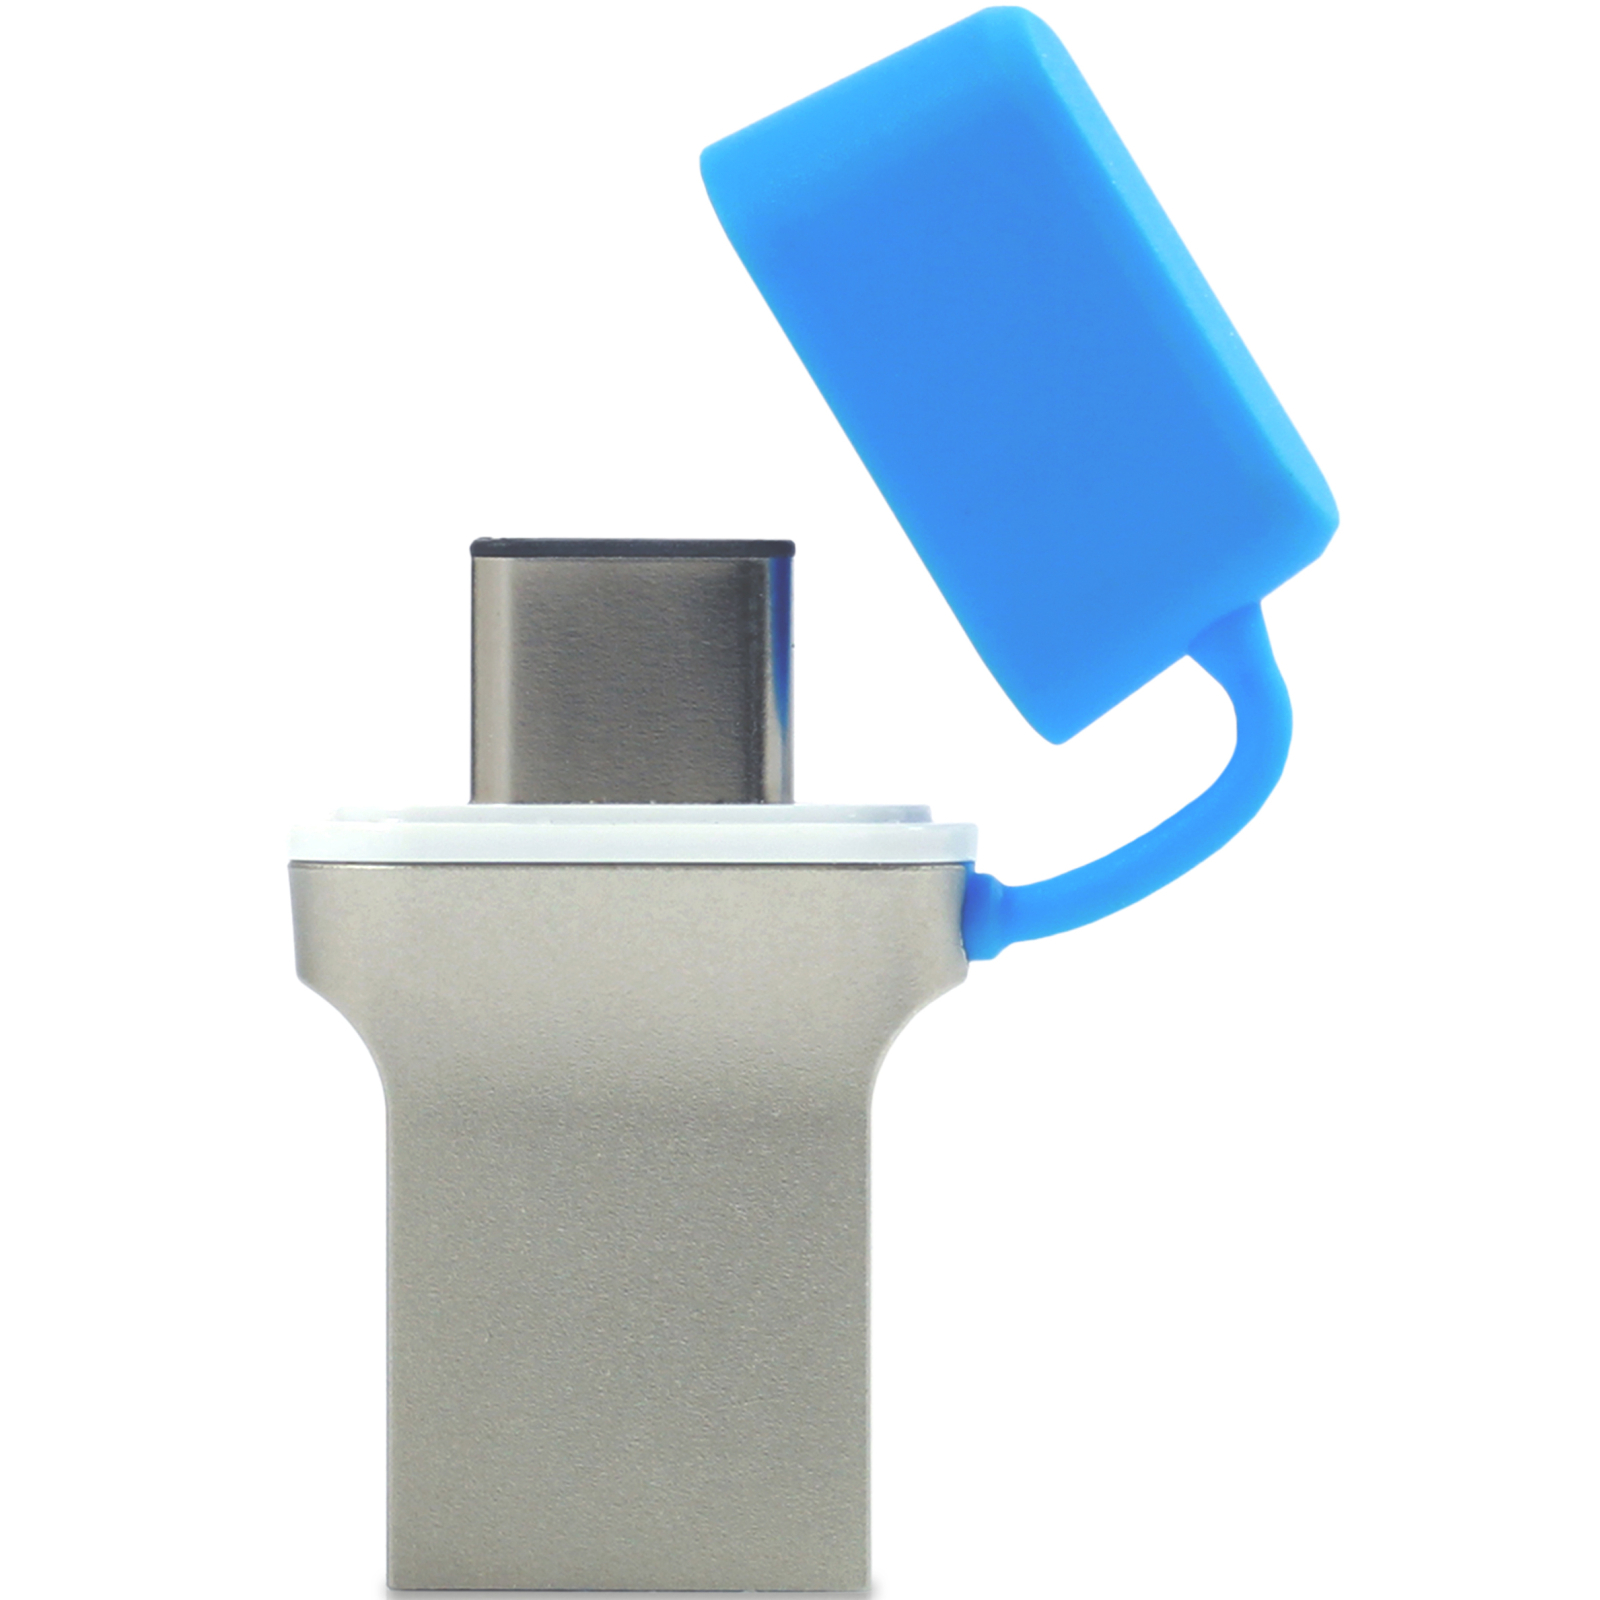 USB флеш накопитель Goodram 64GB DualDrive C Blue USB 3.0 (PD64GH3GRDDCBR10) изображение 2